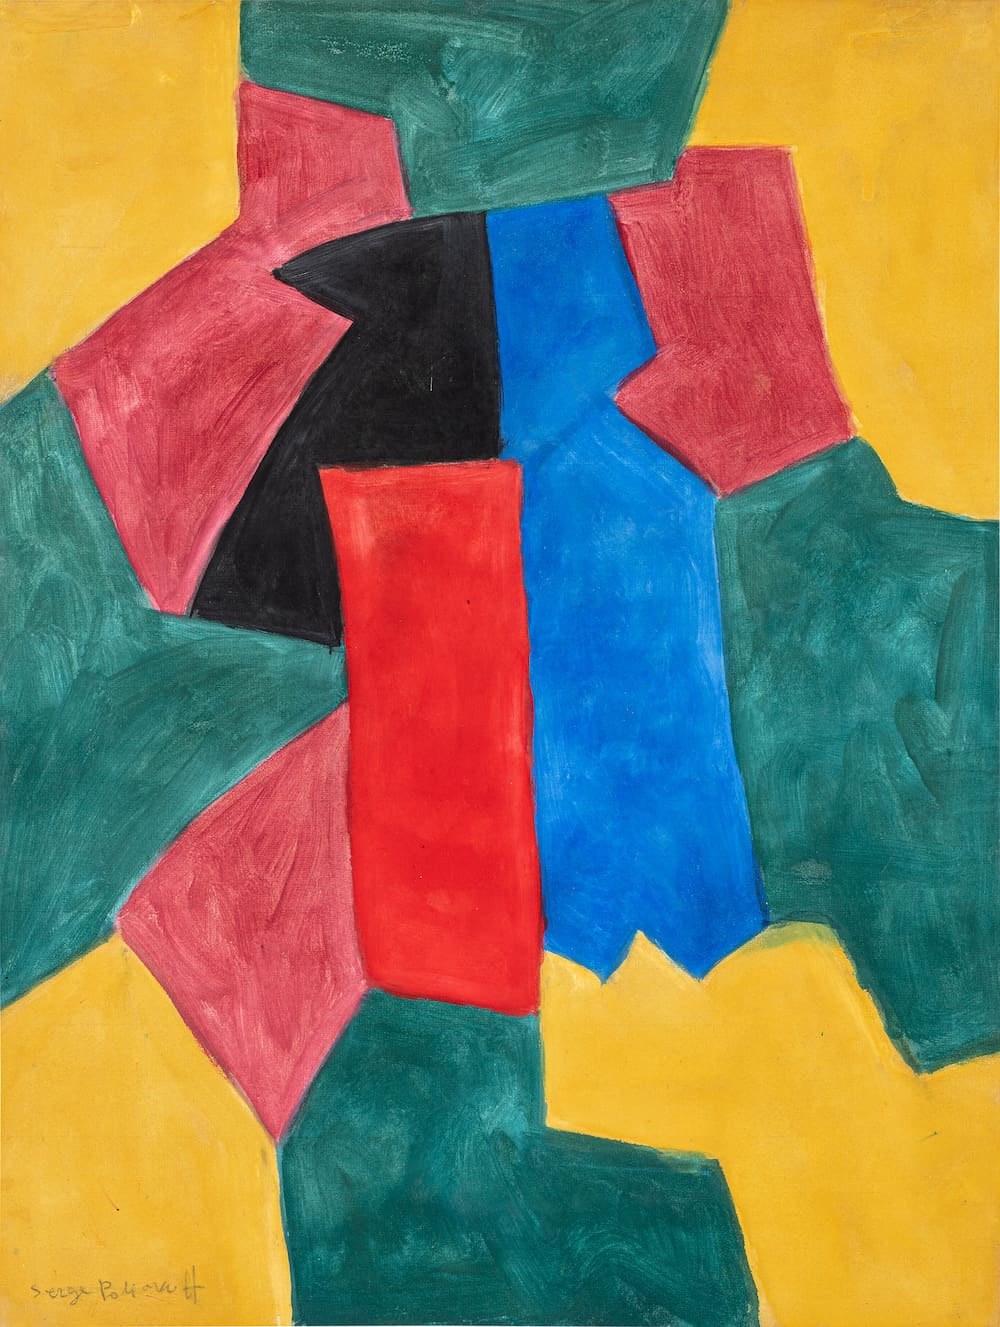 Galerie Ludorff, Serge Poliakoff, Composition abstraite, 1967, Gouache on paper, 63 x 49 cm